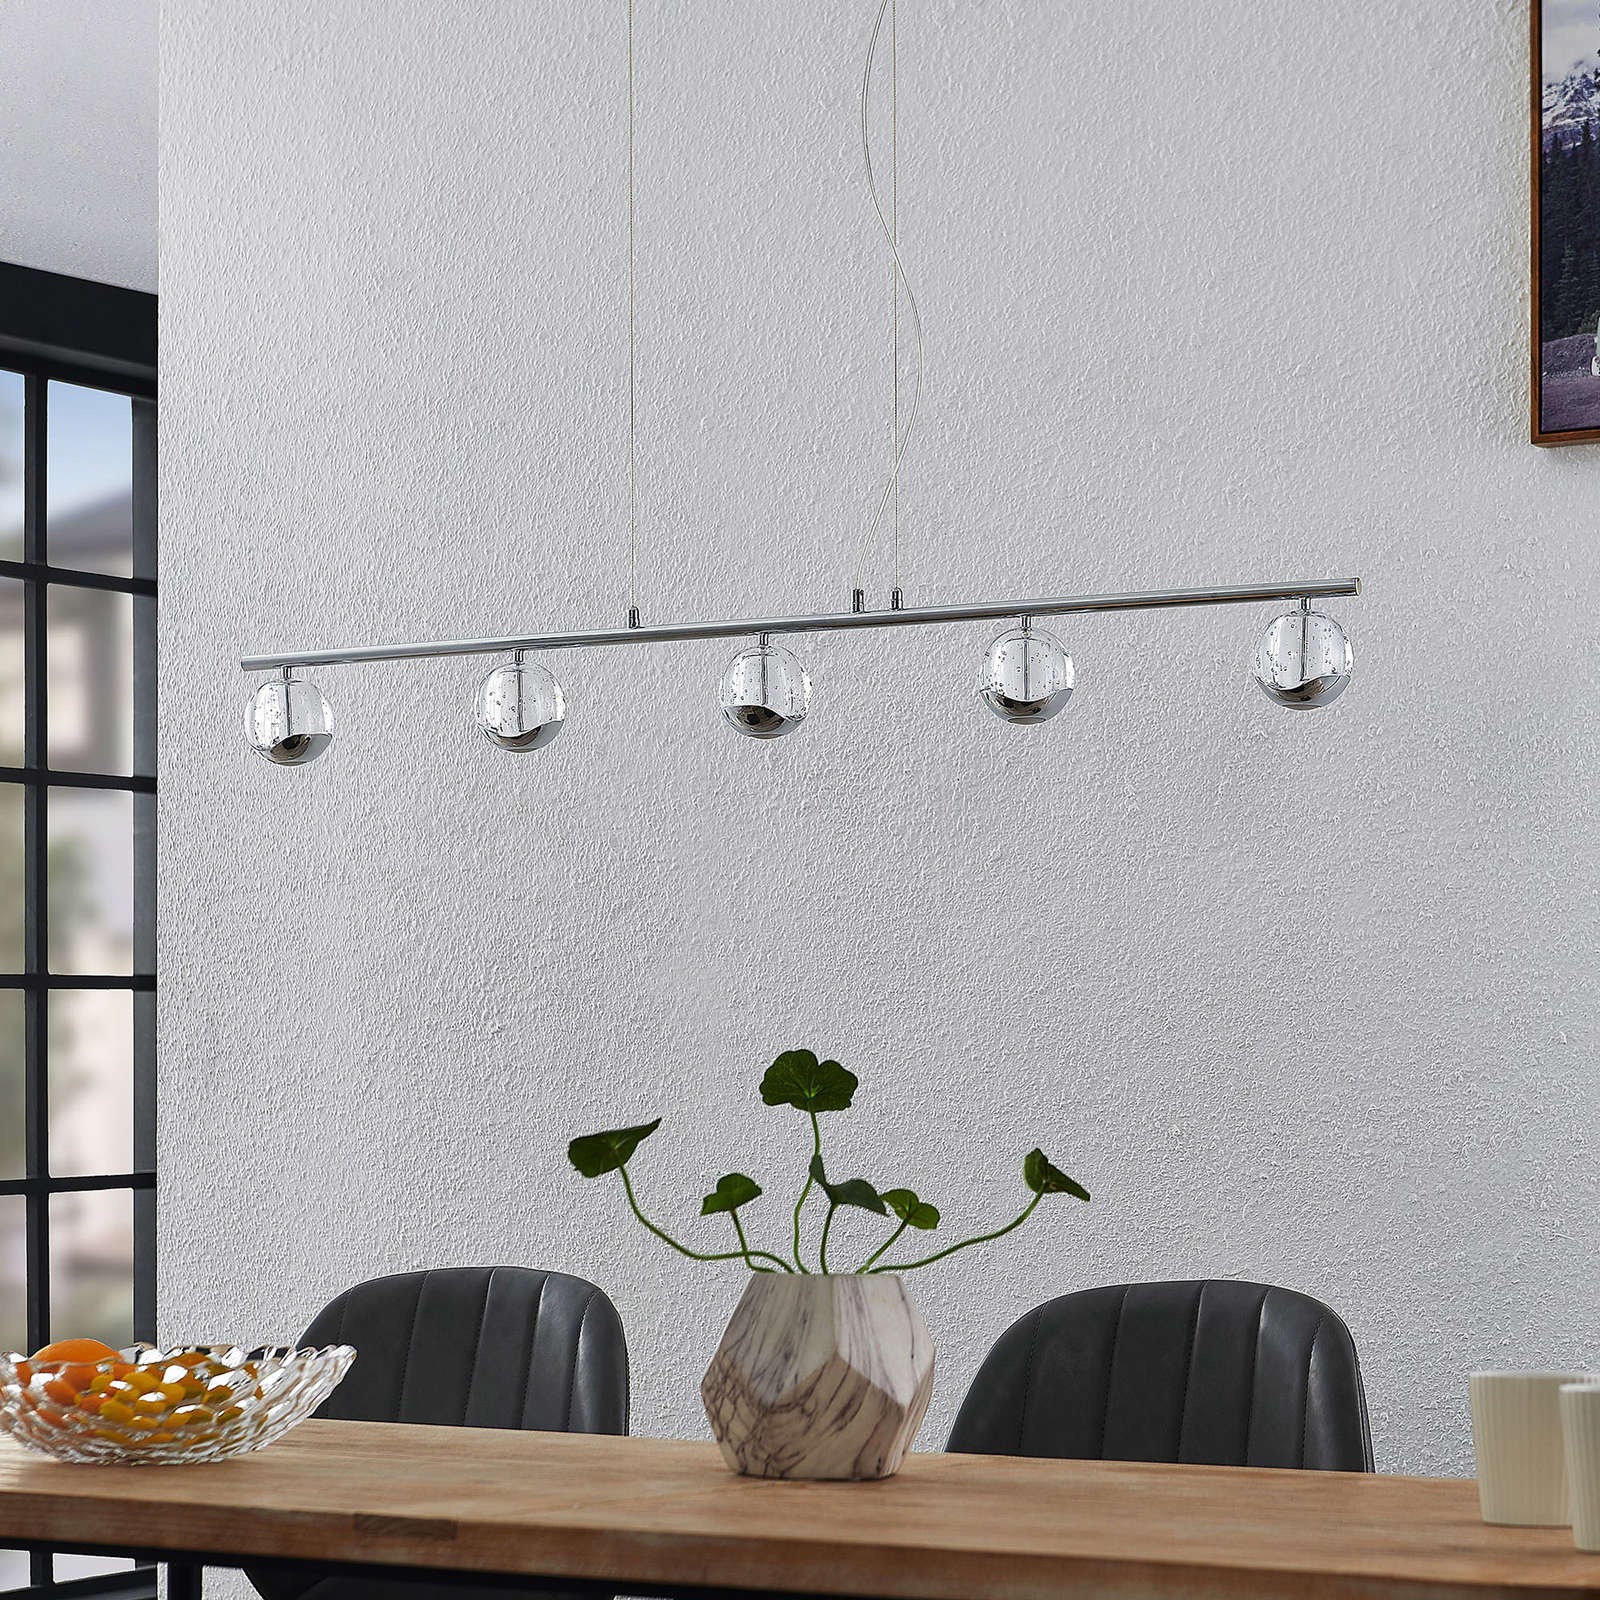 Lucande Kilio LED hanging light, 5-bulb, chrome